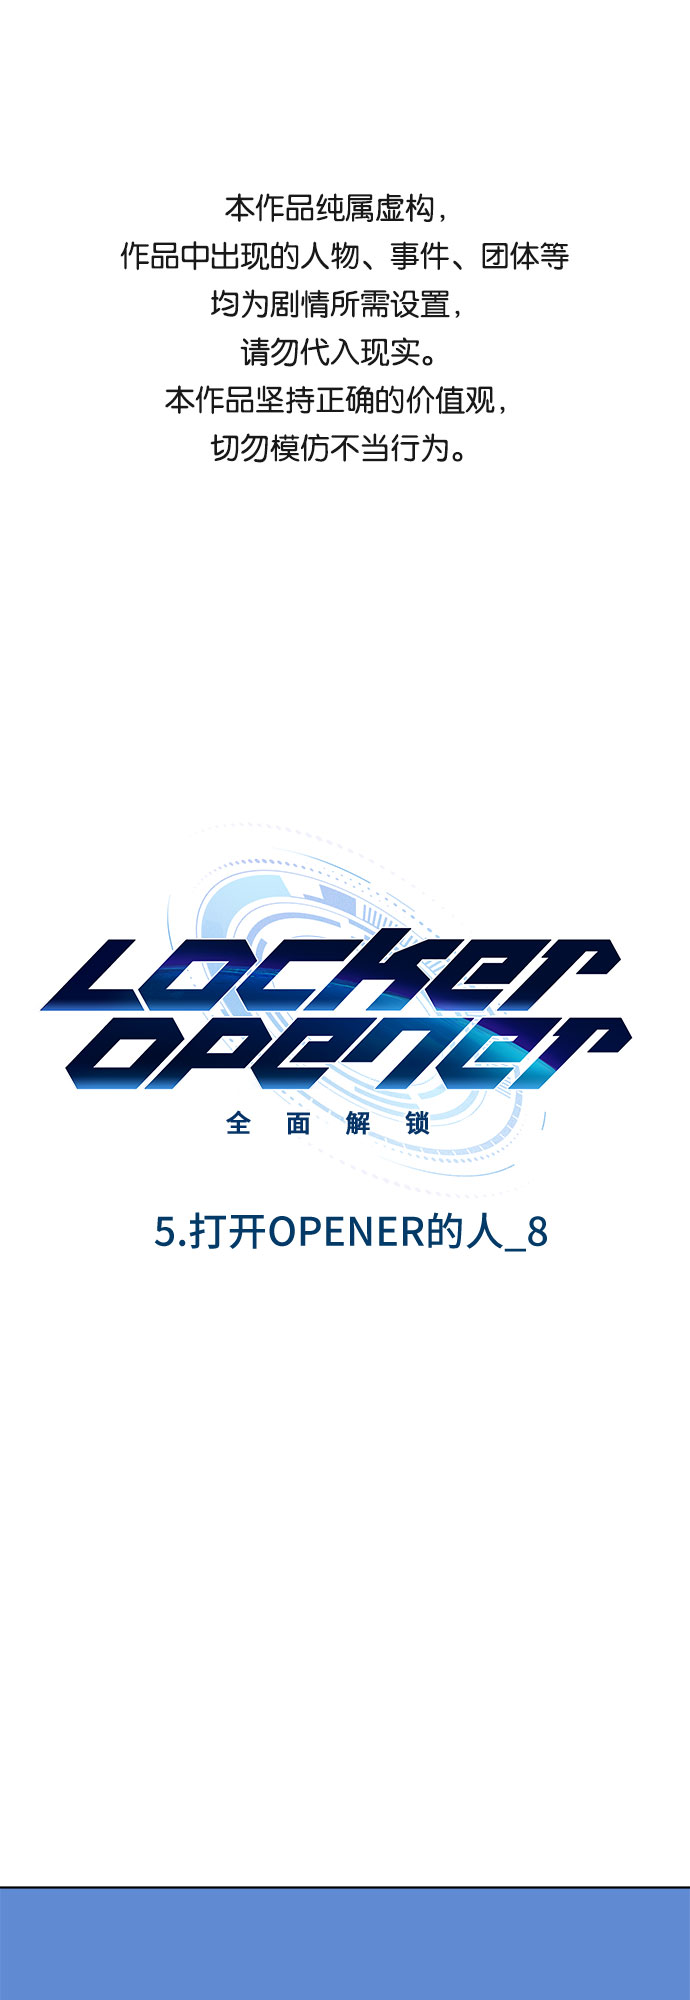 LOCKER OPENER 全面解锁 - [第72话] 打开OPENER的人_8(1/2) - 1